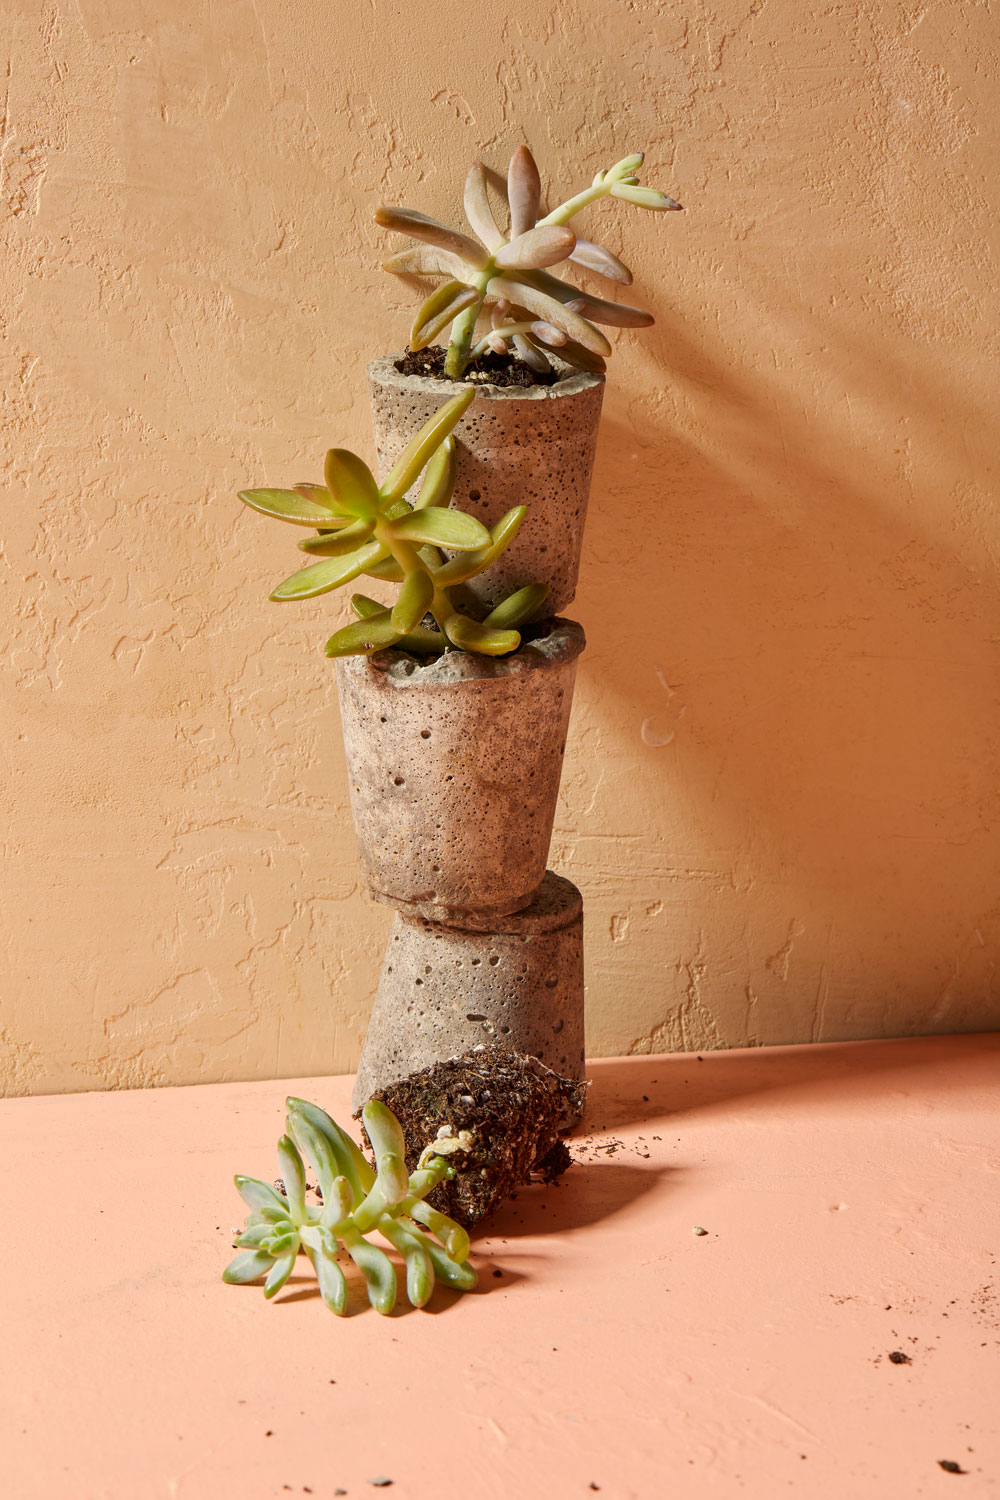 Small Succulent plants